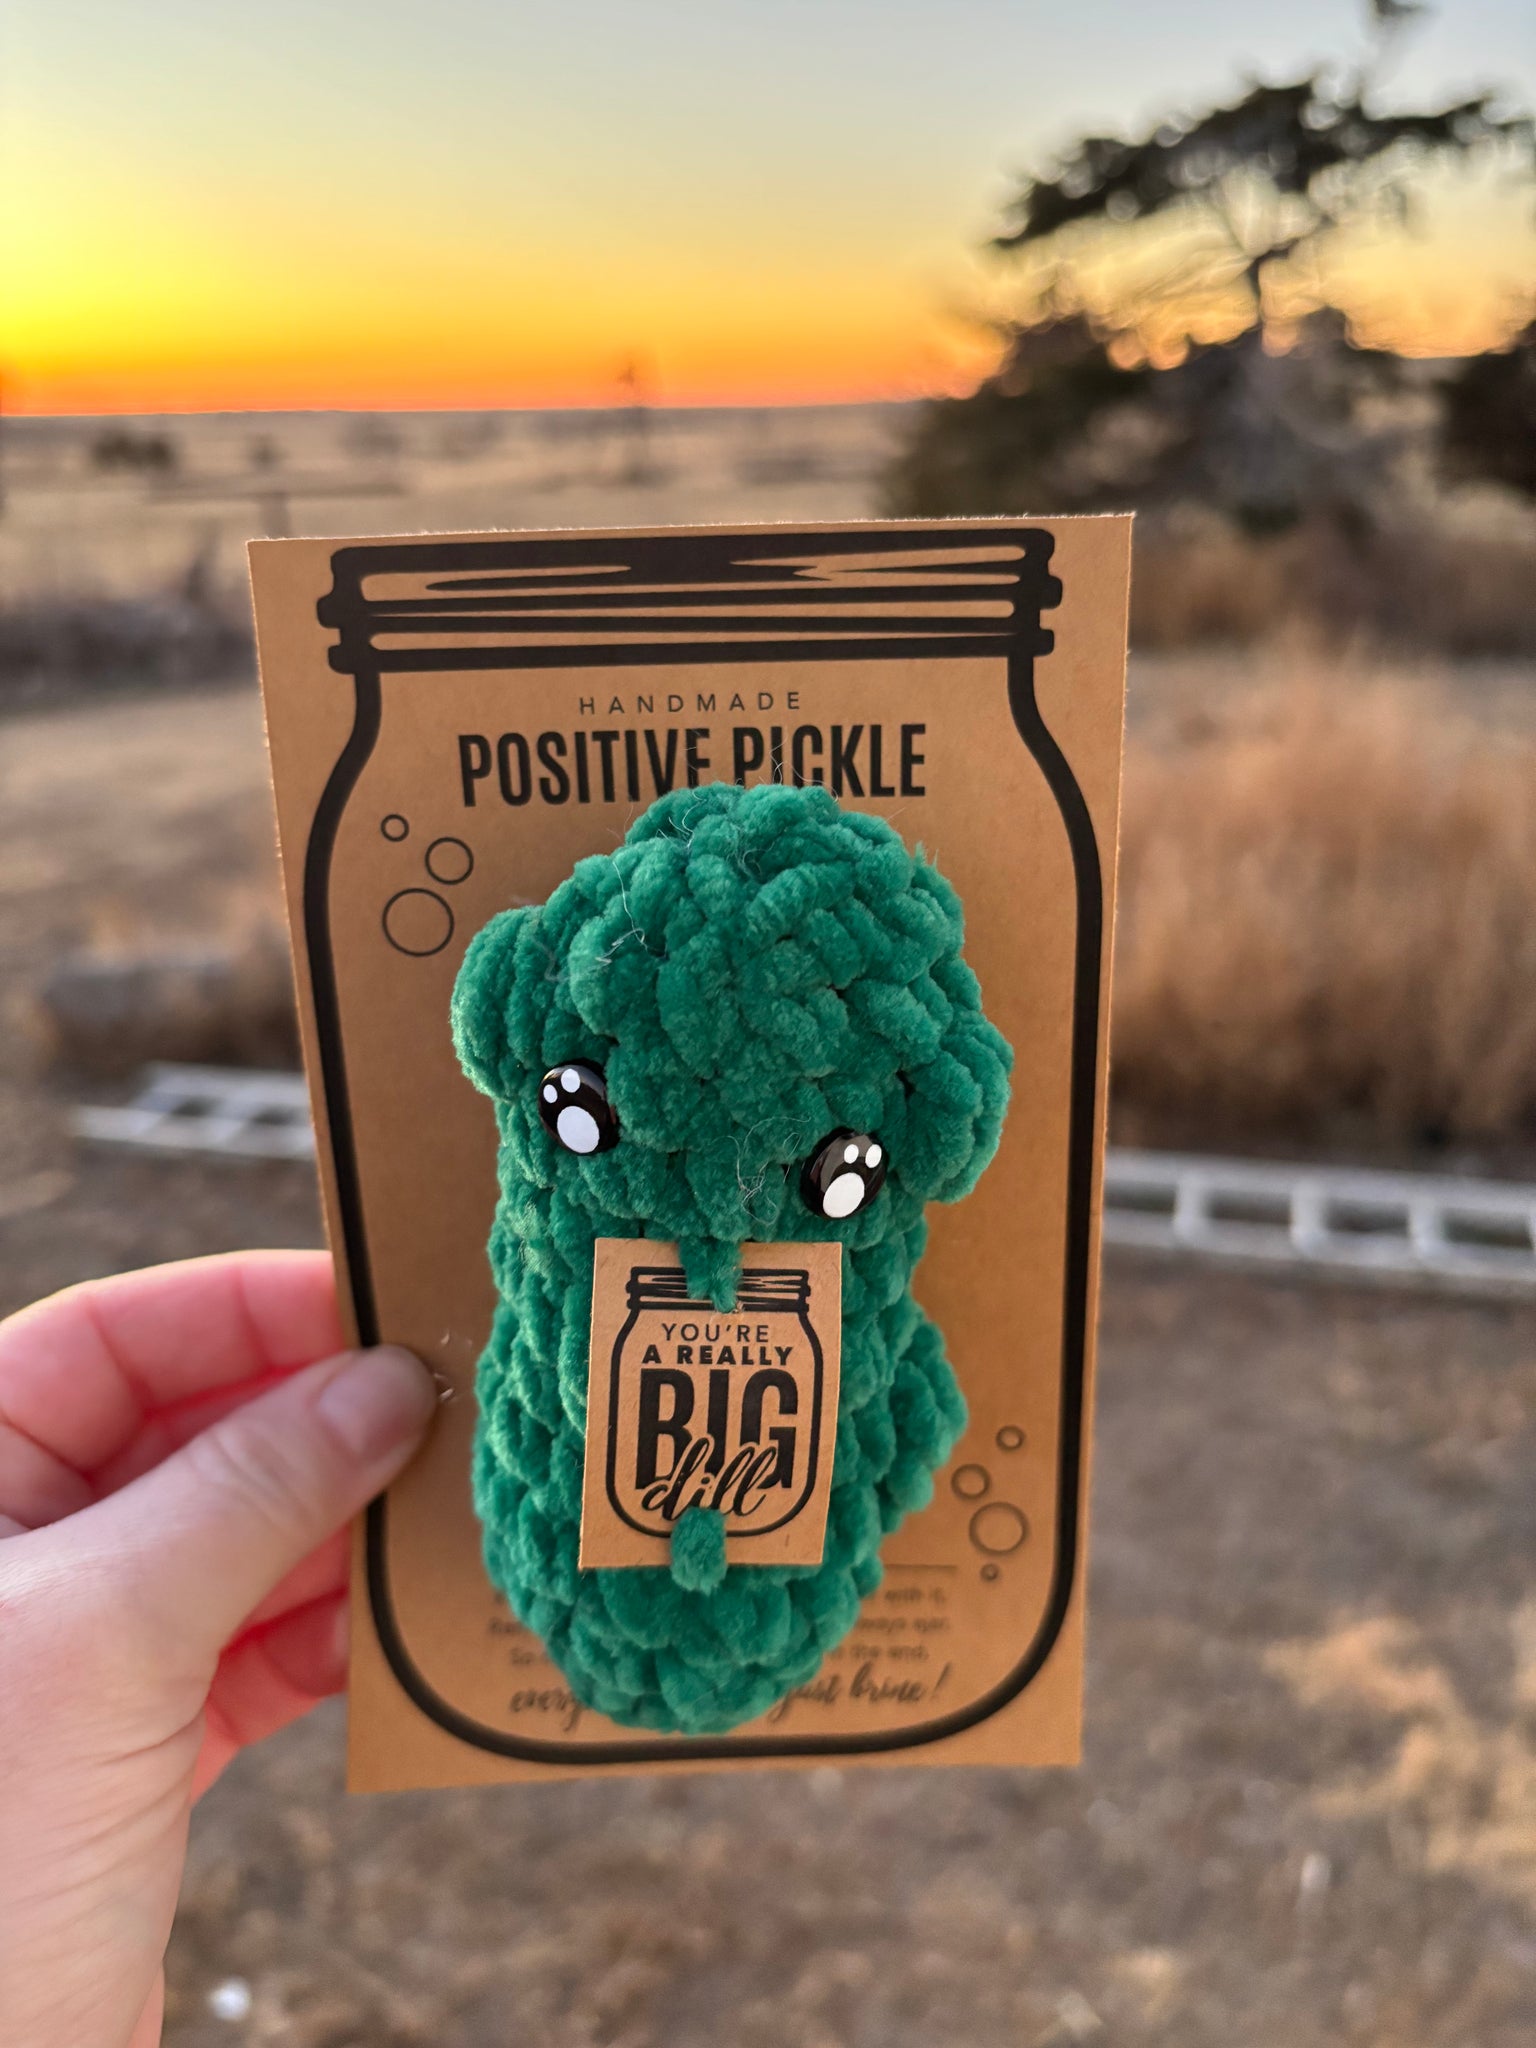 Positive pickle